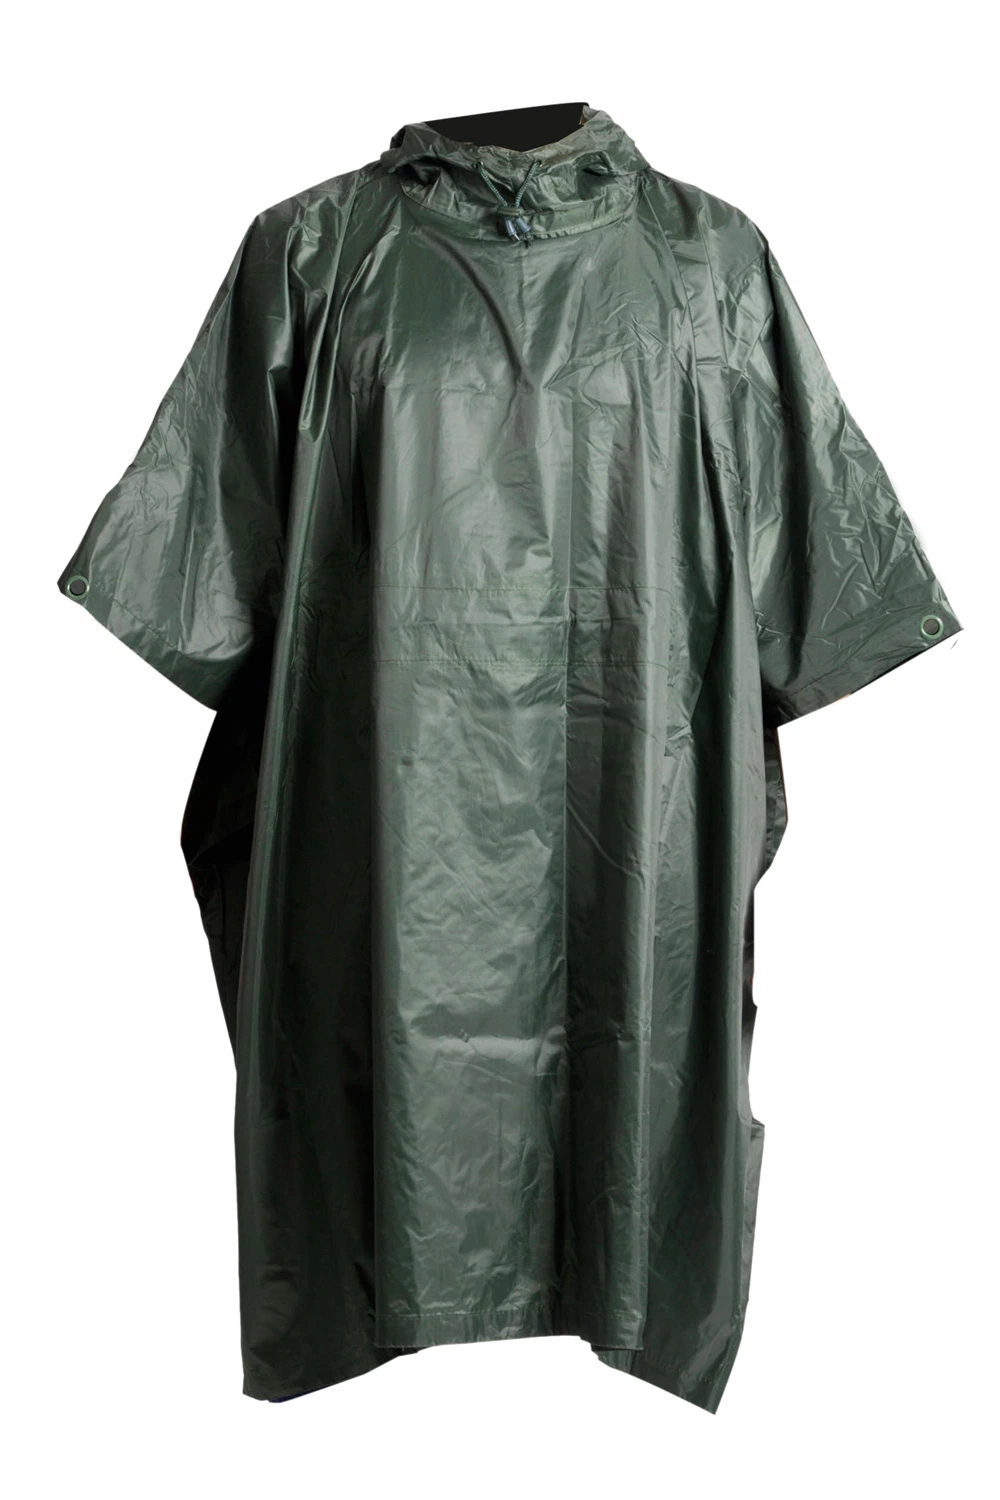 Custom PVC Coating Waterproof Rain Suit Coat Jacket Yellow Raincoats Rain Poncho for Men Women Adults